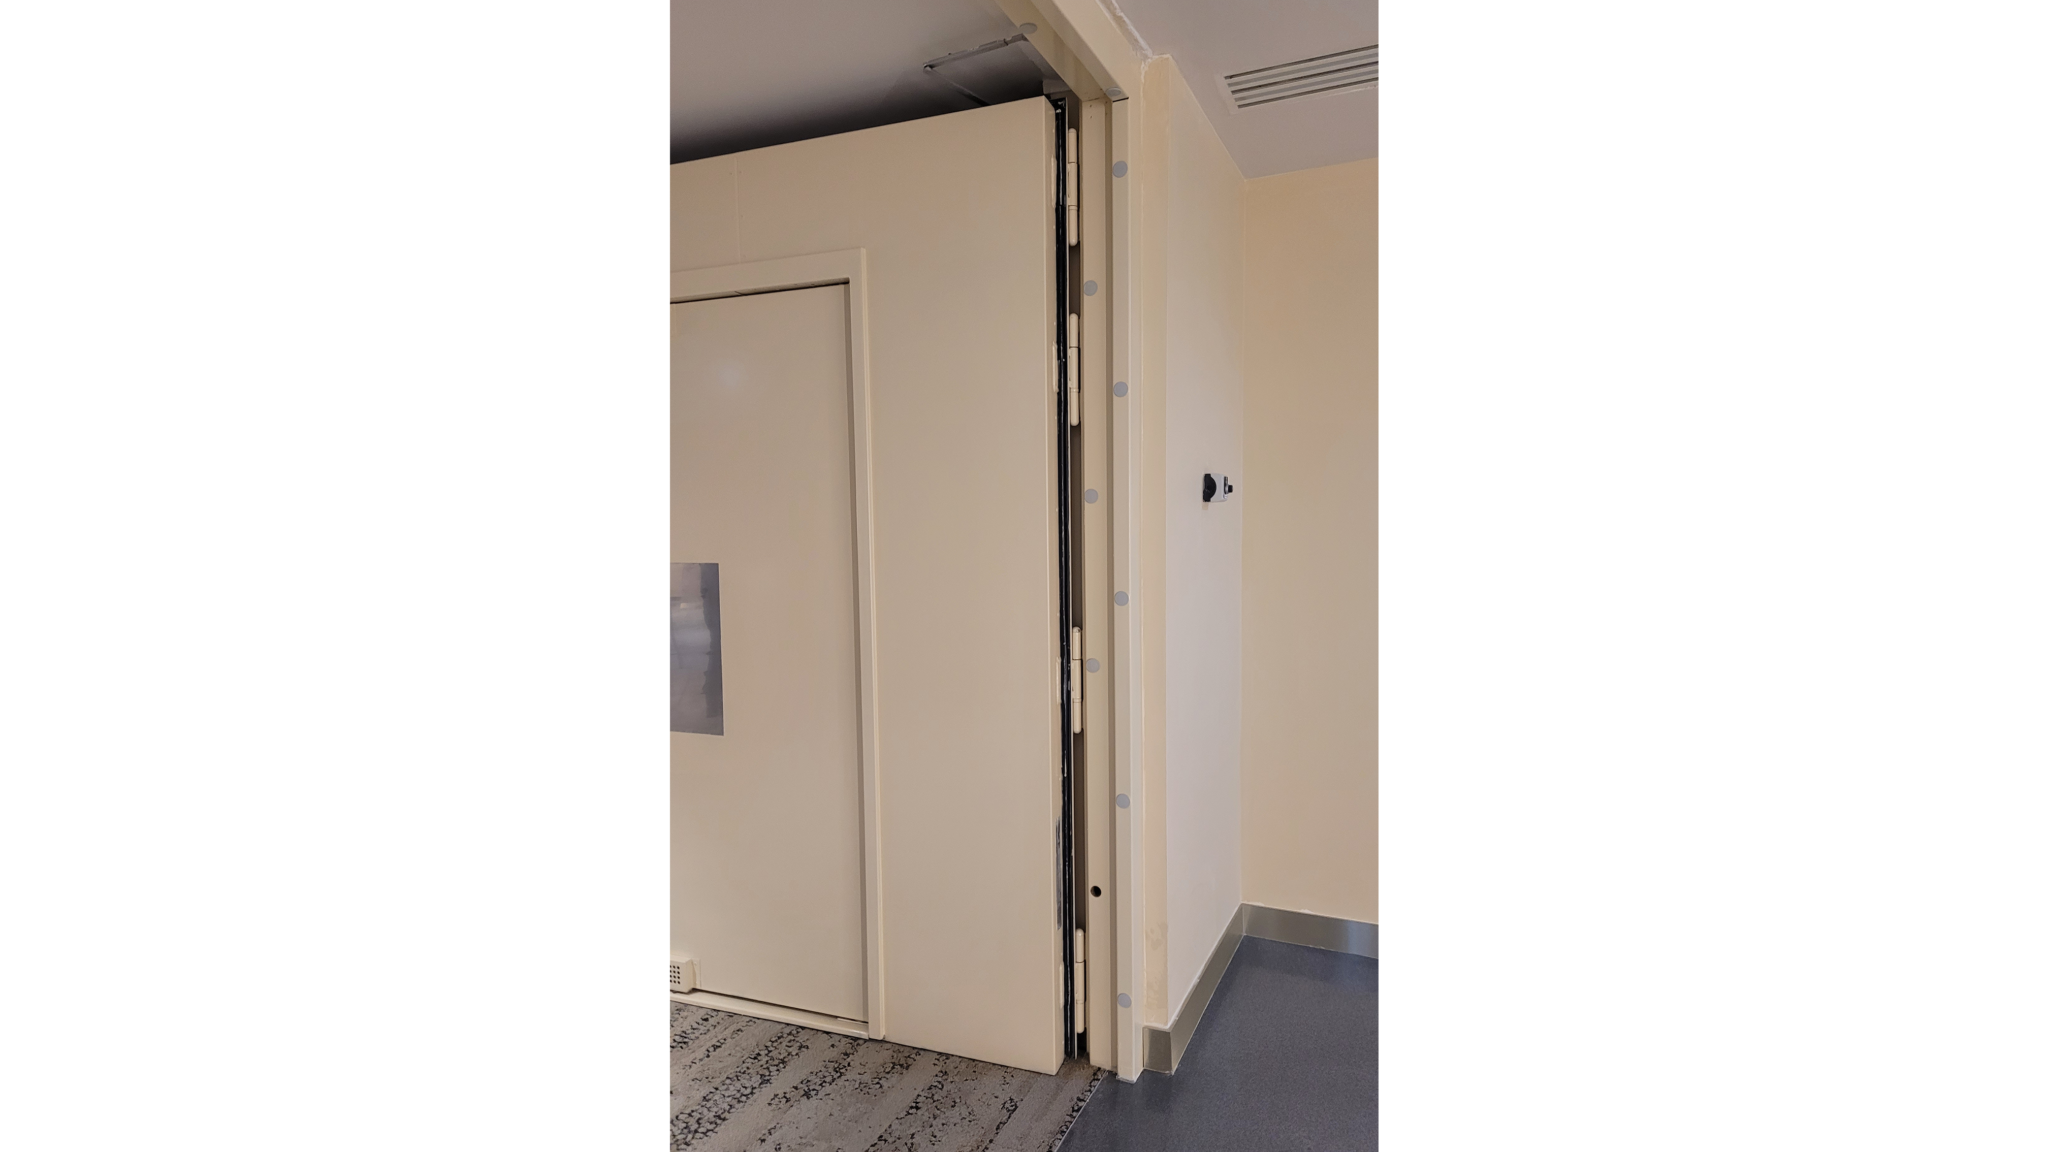 Contact de la porte battante grande dimensions maintenue ouverte Hotel Pullman